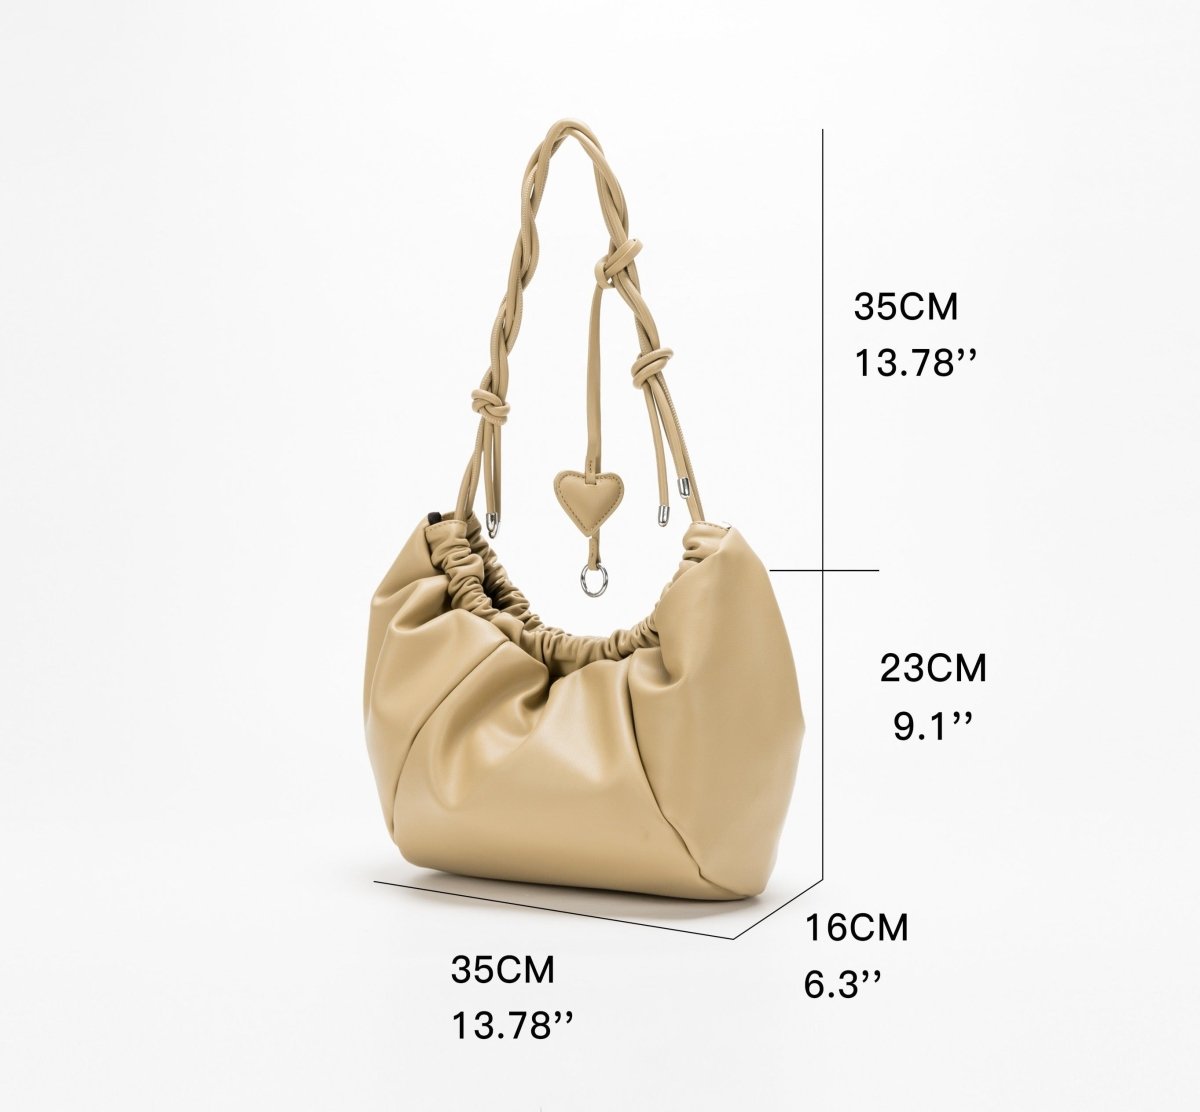 Perfect Hermes Birkin Replica Review - Authentic & Replica Handbag Reviews  by The Purse Queen | Hermes bag birkin, Replica handbags, Stylish handbags